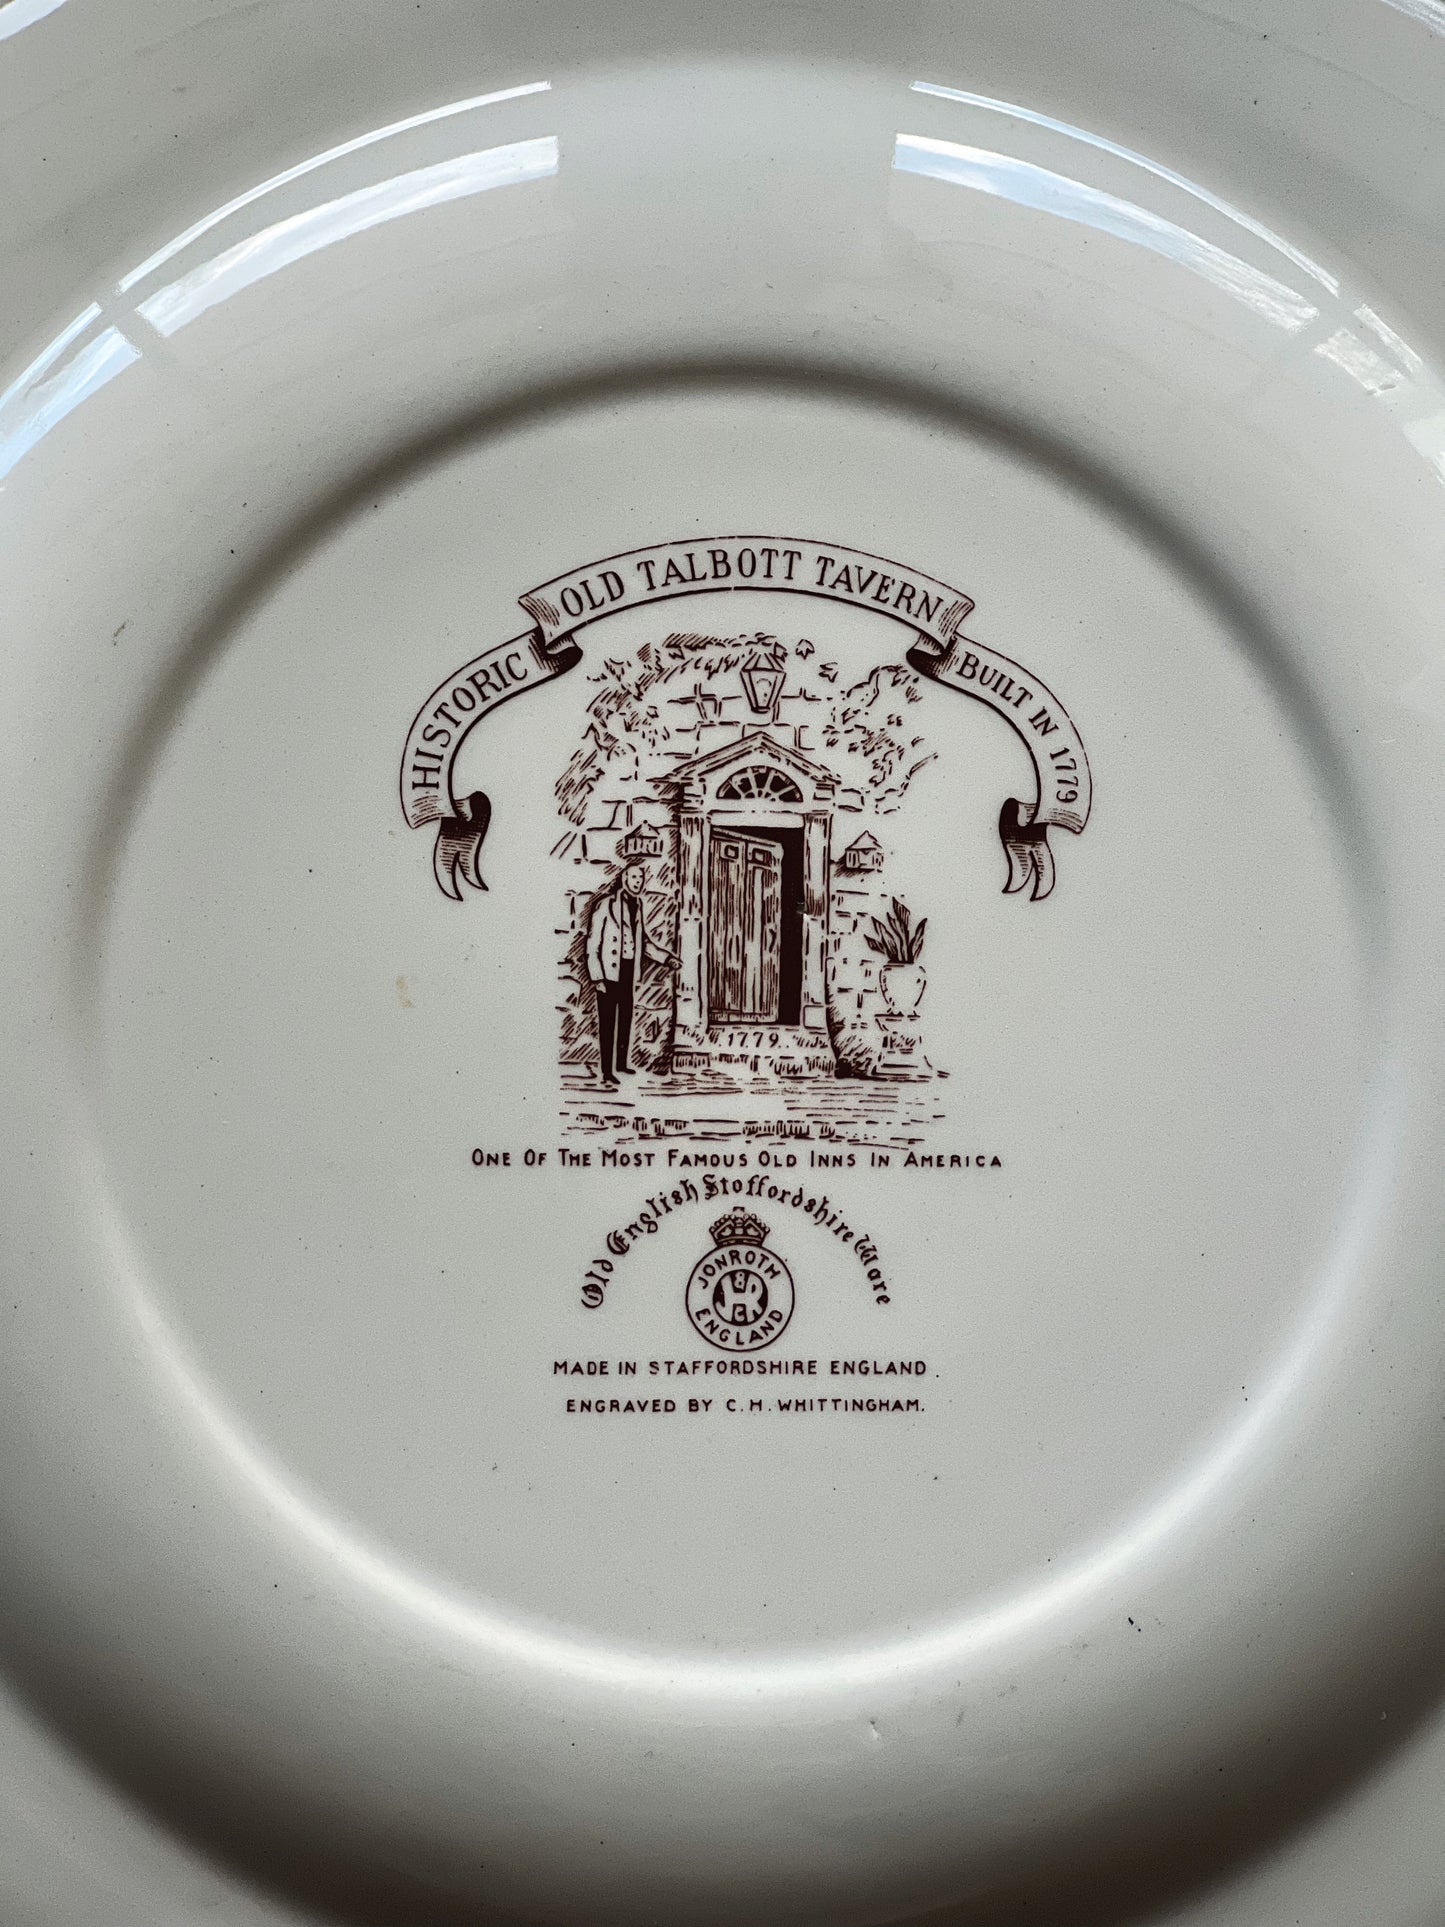 Vintage JonRoth England Old Talbott Tavern Bardstown Kentucky Plate